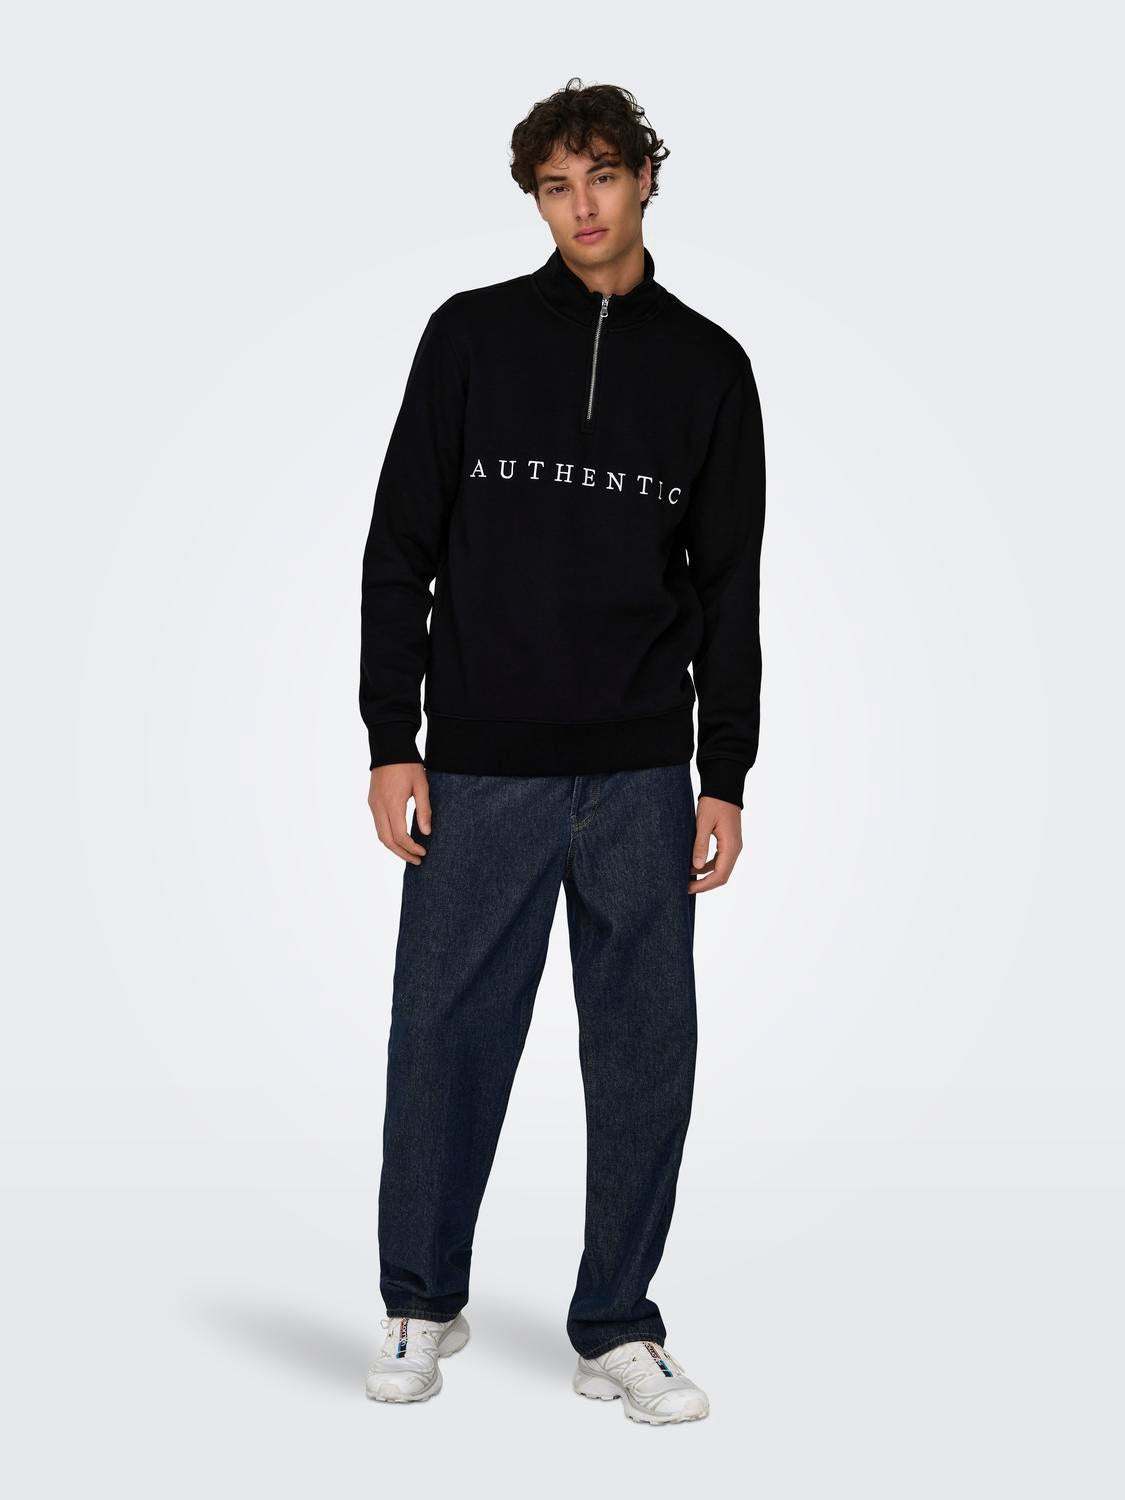 Half-zip sweatshirt with high neck | Black | ONLY & SONS®